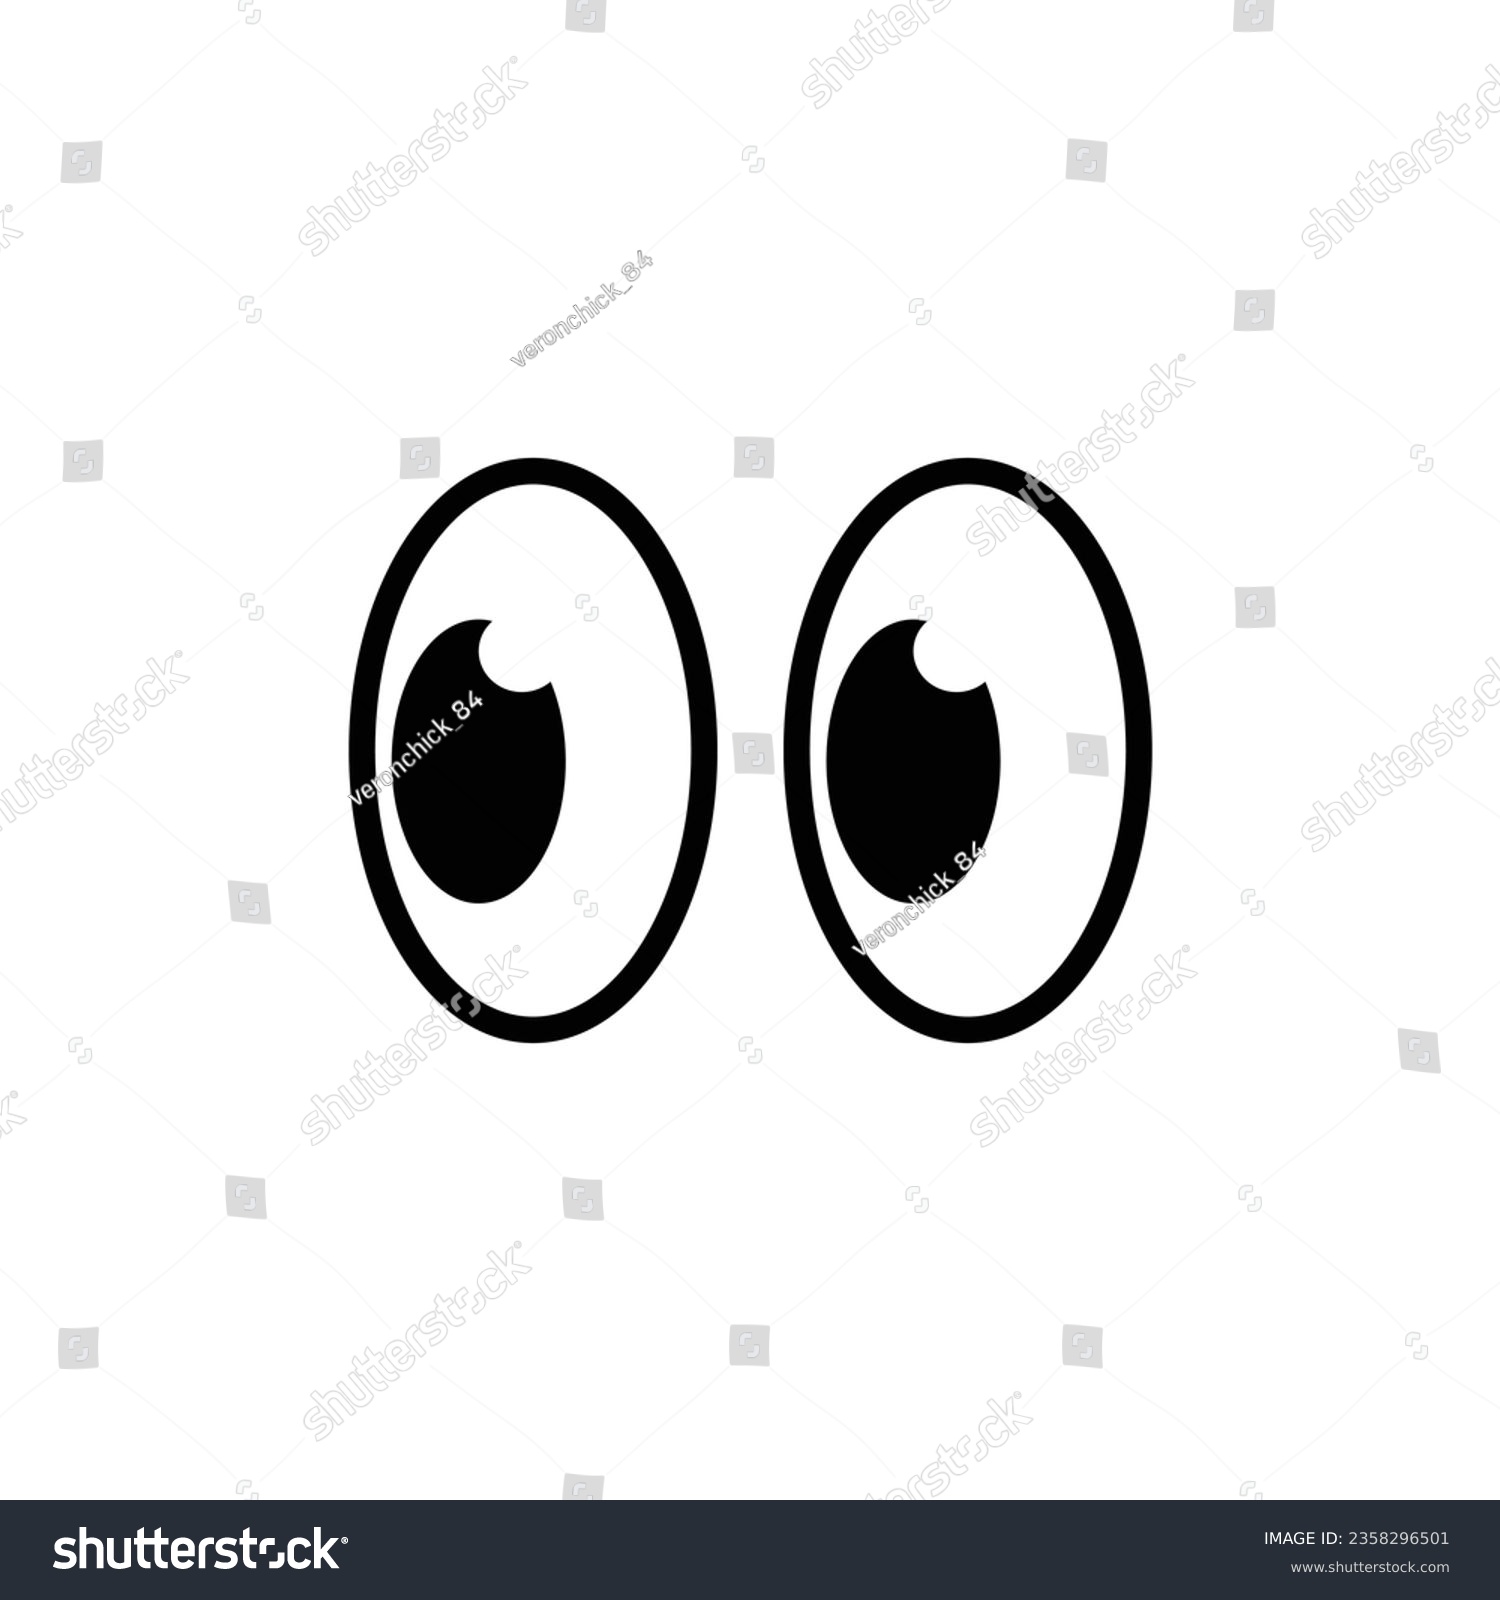 SVG of open eye icon, cartoon funny eye icon.  svg